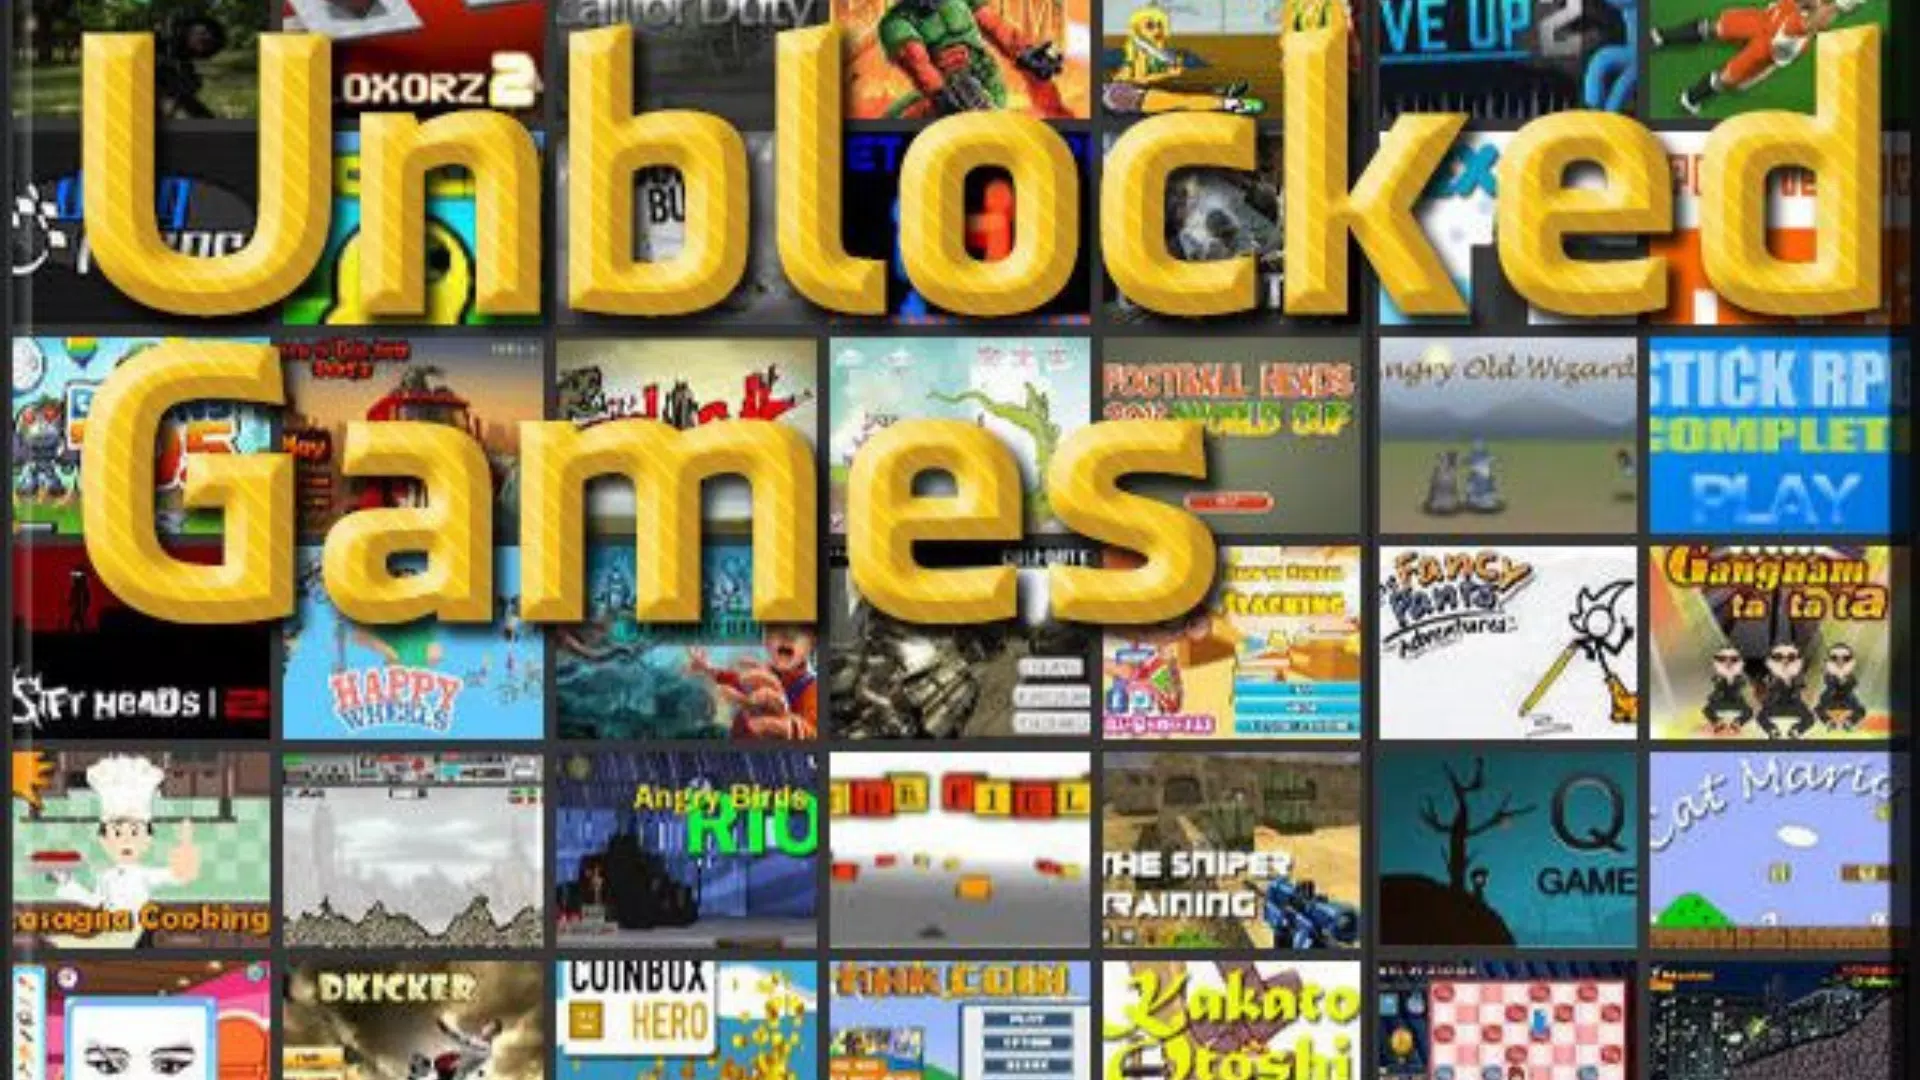 Unblocked Games - Family Restaurant